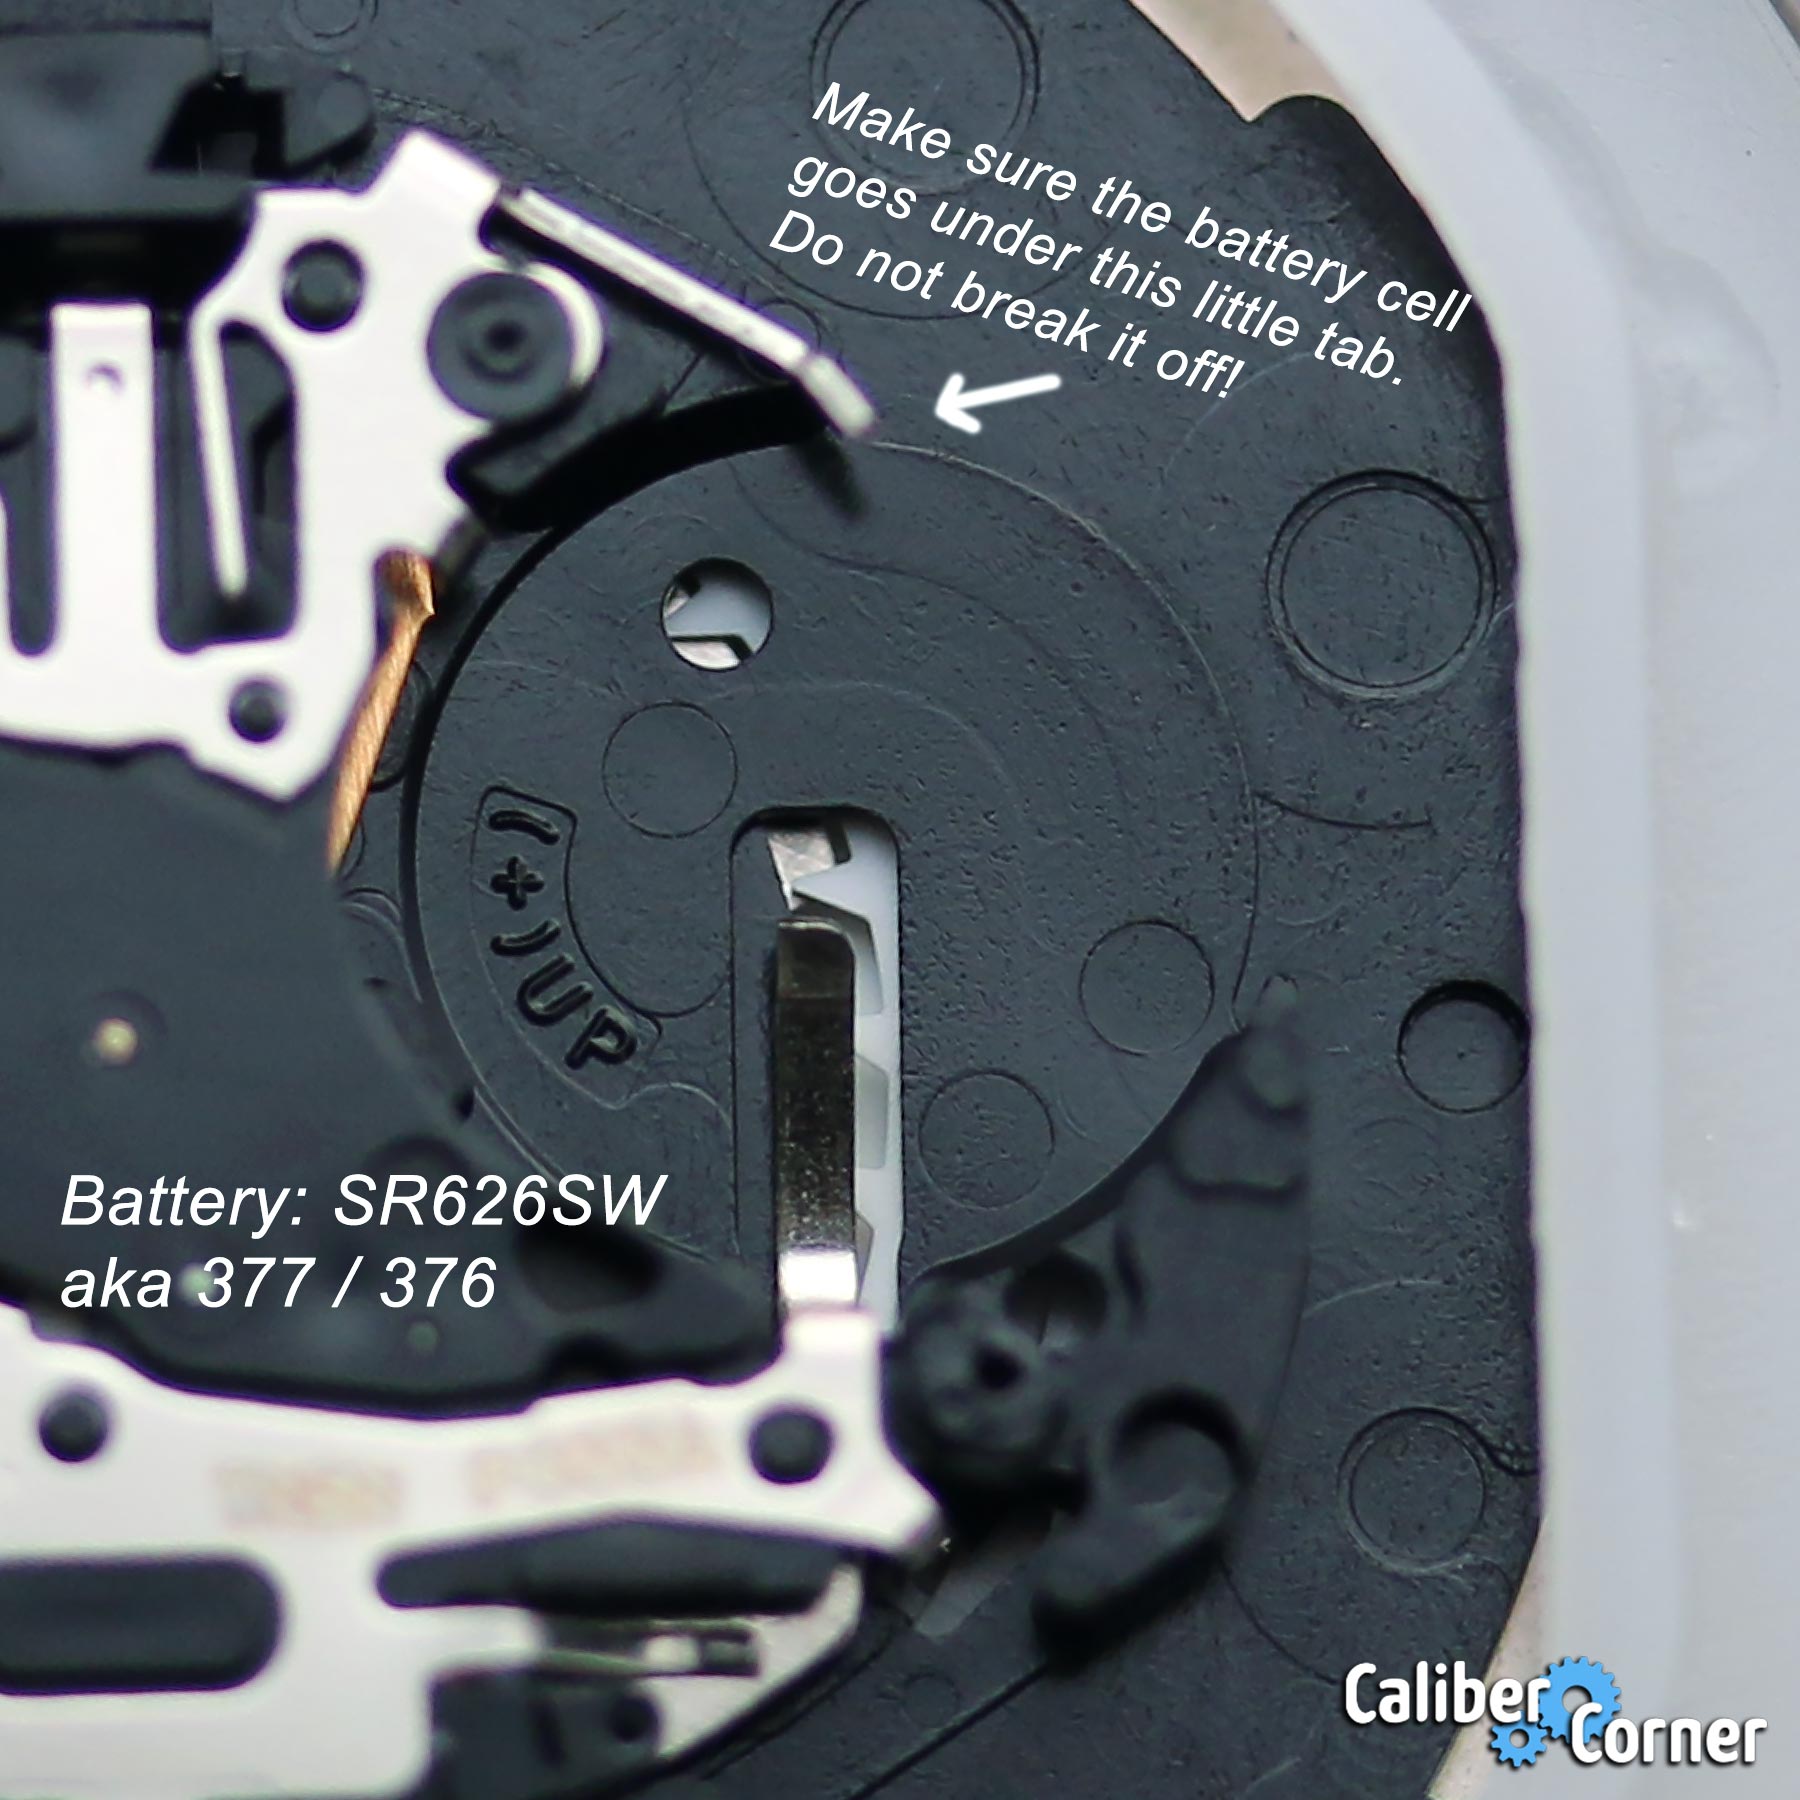 Seiko Caliber Pc33 Battery Replacement